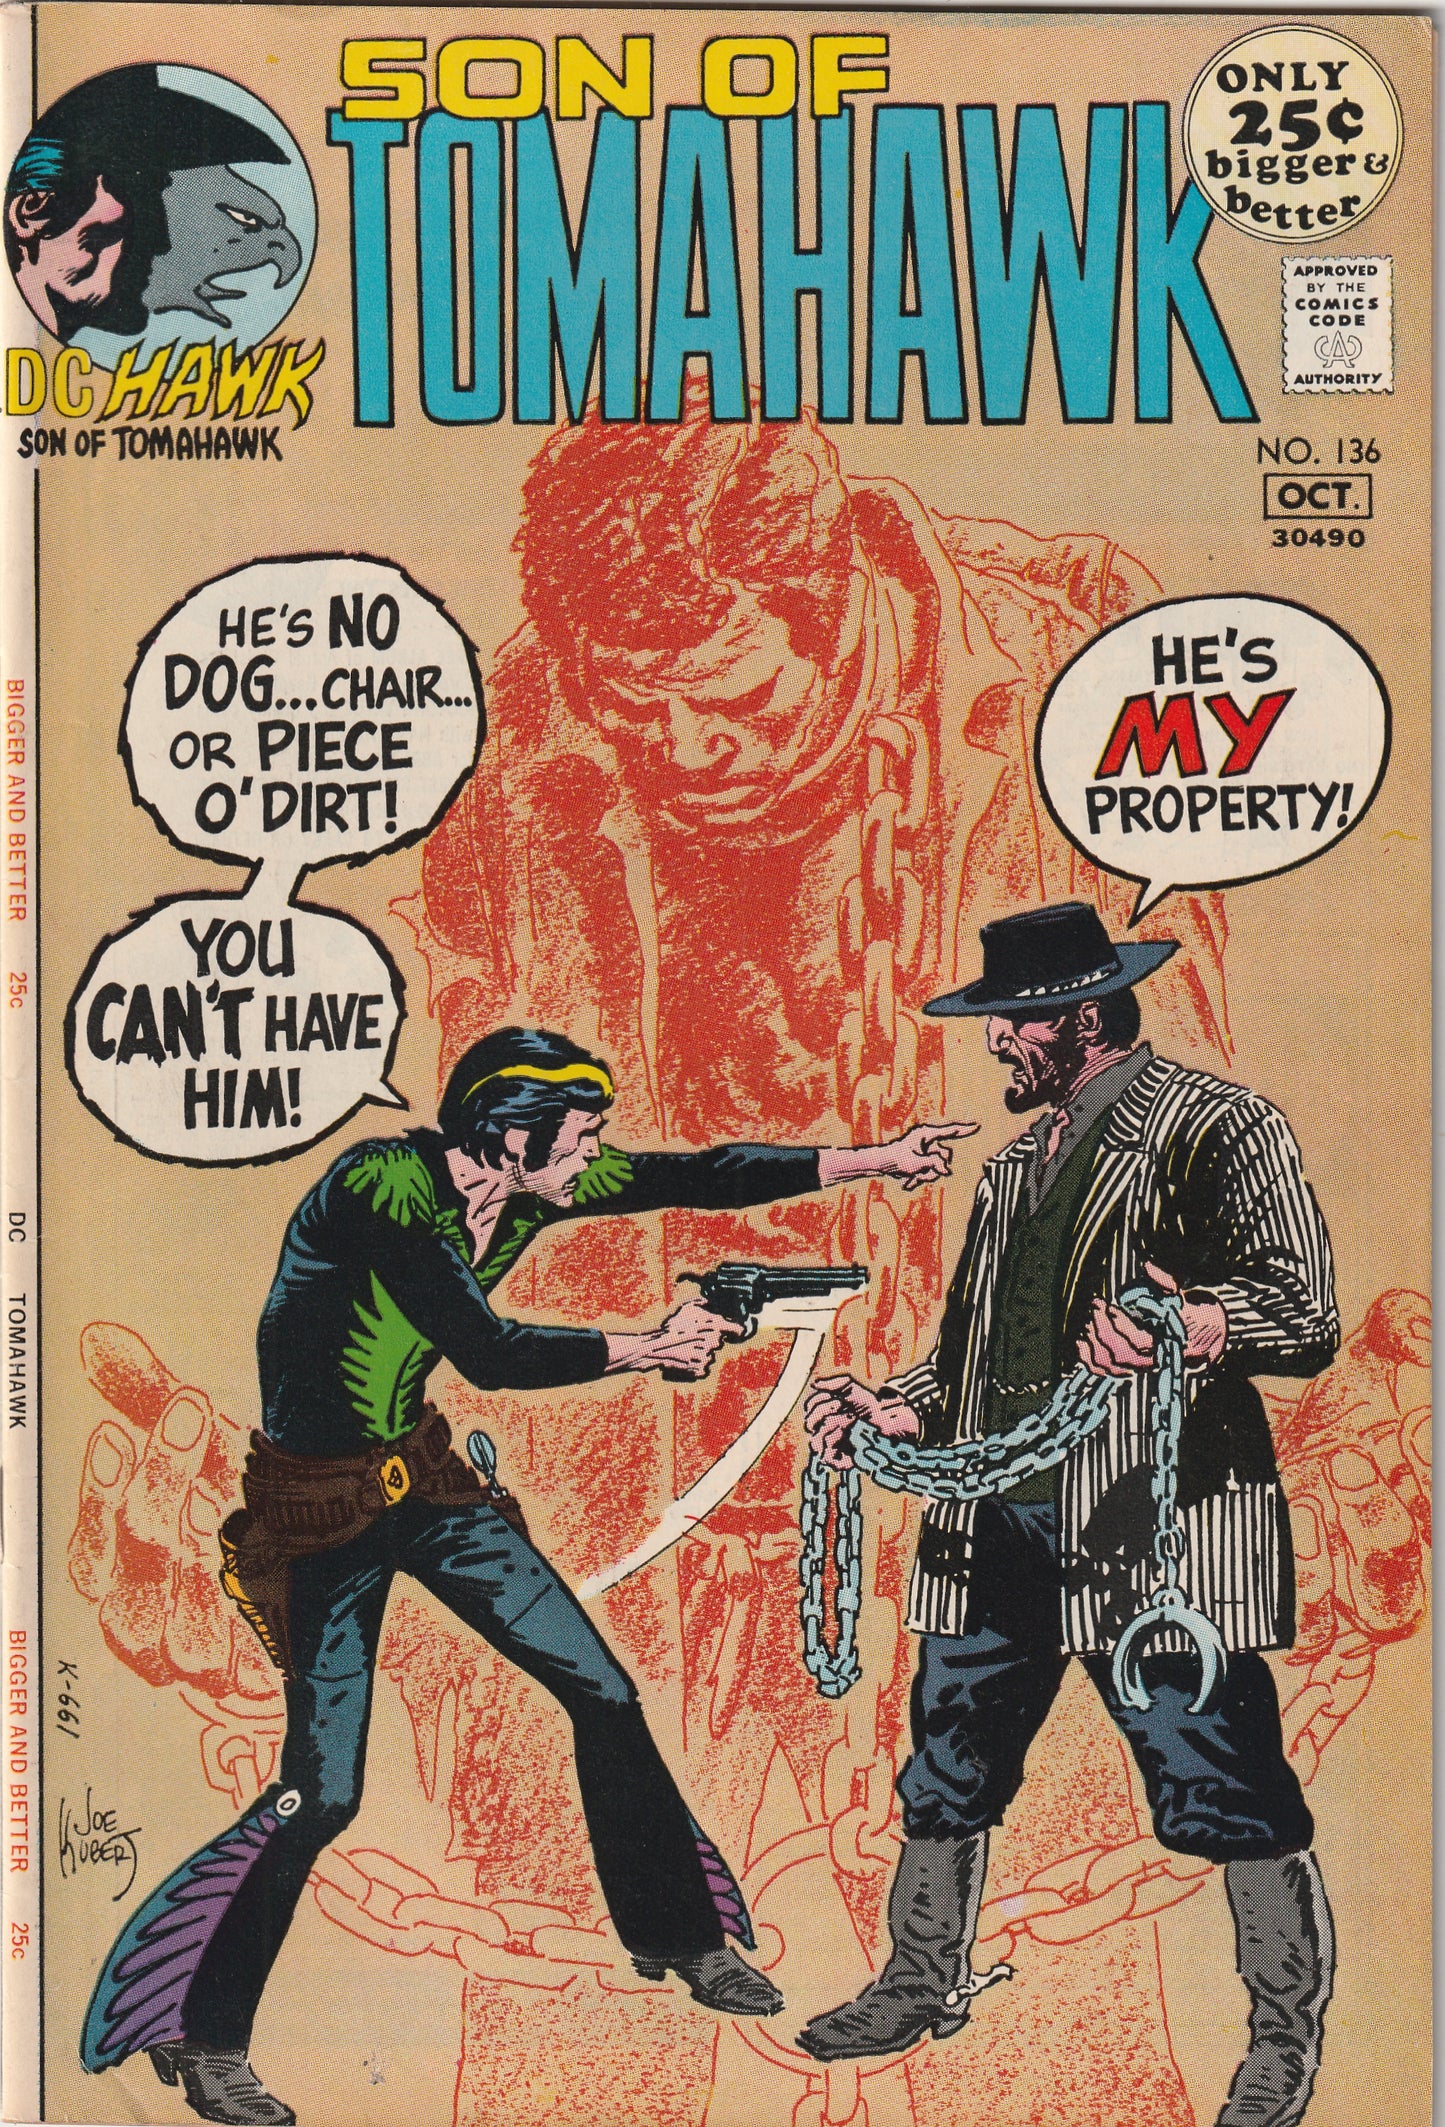 Son of Tomahawk #136 (1971)